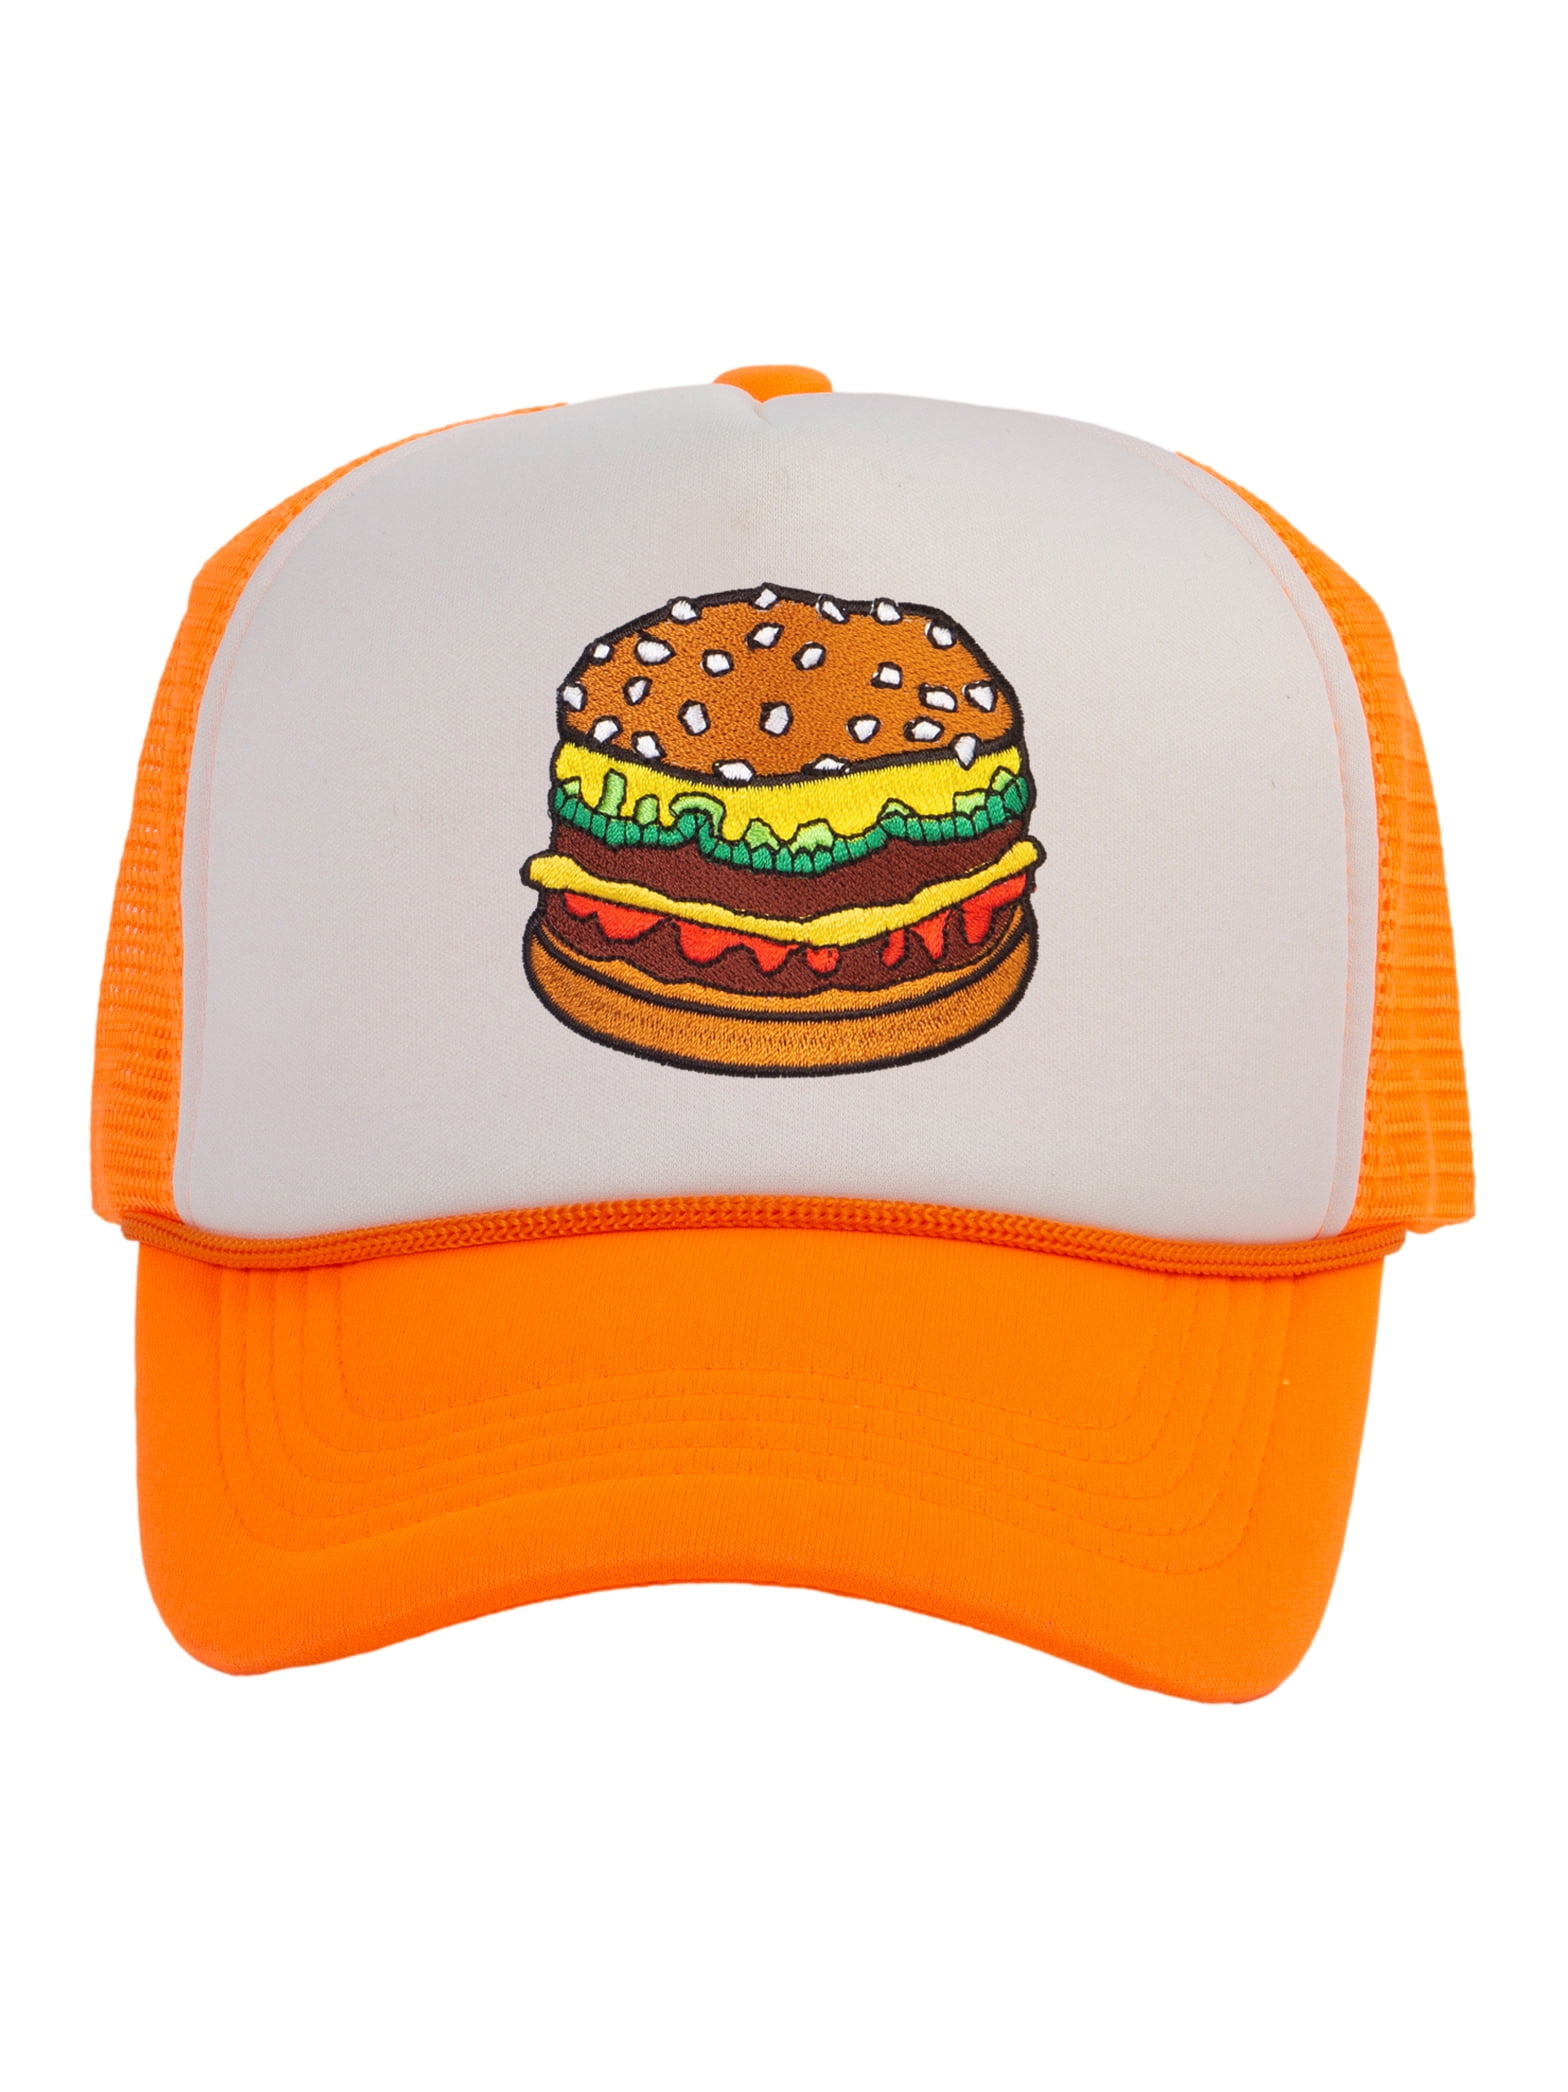 Top Headwear Hamburger Cheeseburger Trucker Hat - Men's Snapback Burger  Food Cap White/Neon Orange